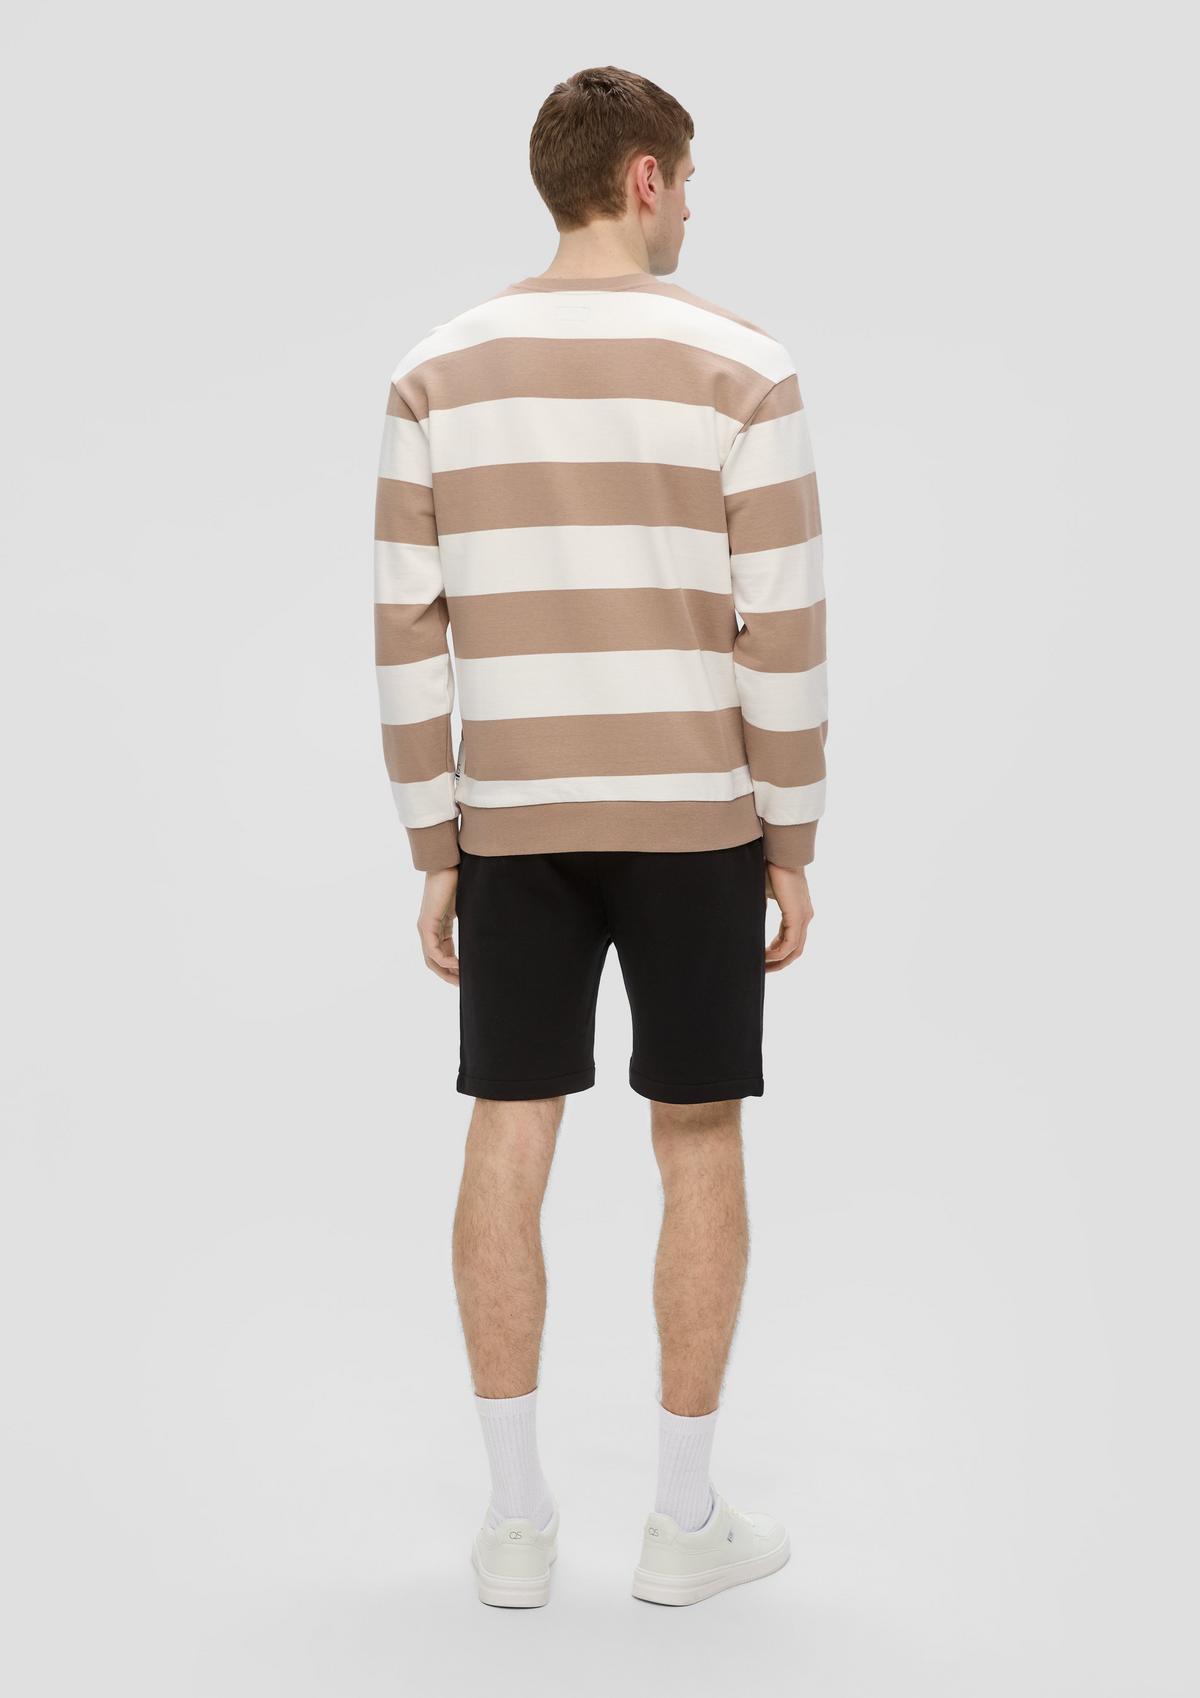 s.Oliver Cotton blend sweatshirt